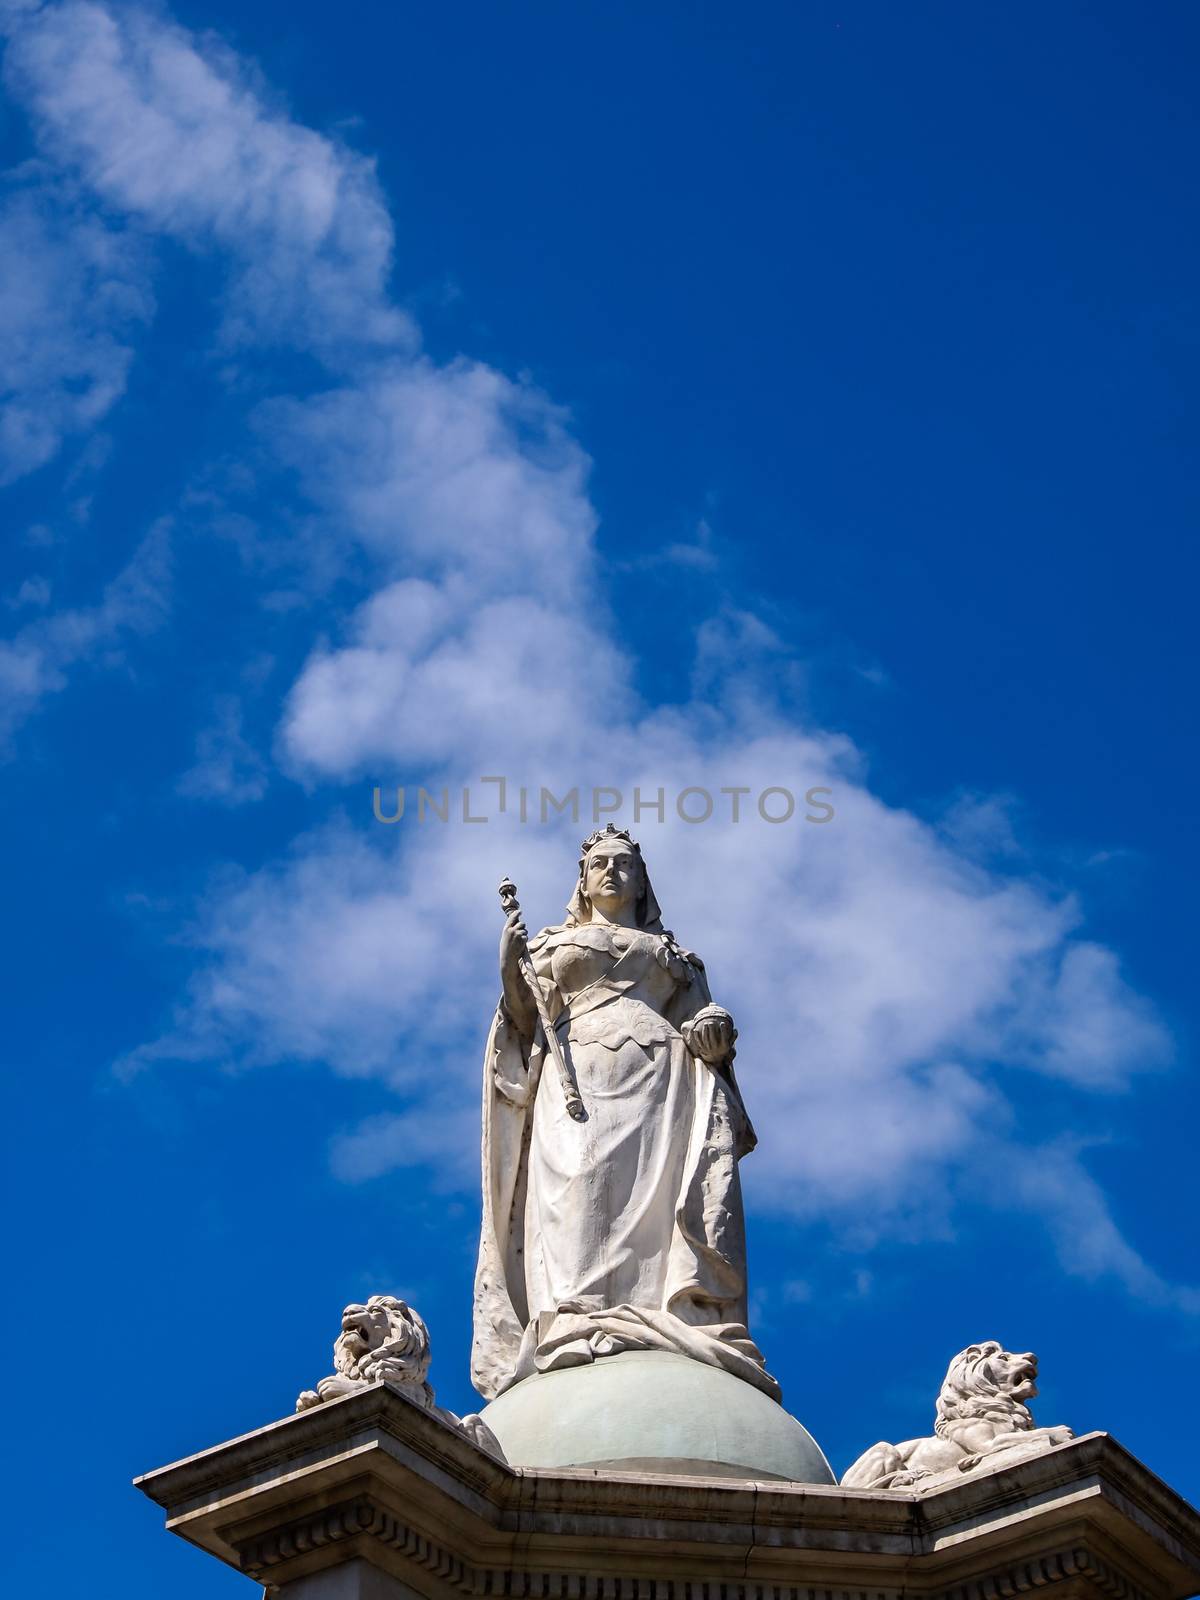 Queen Victoria statue by simpleBE